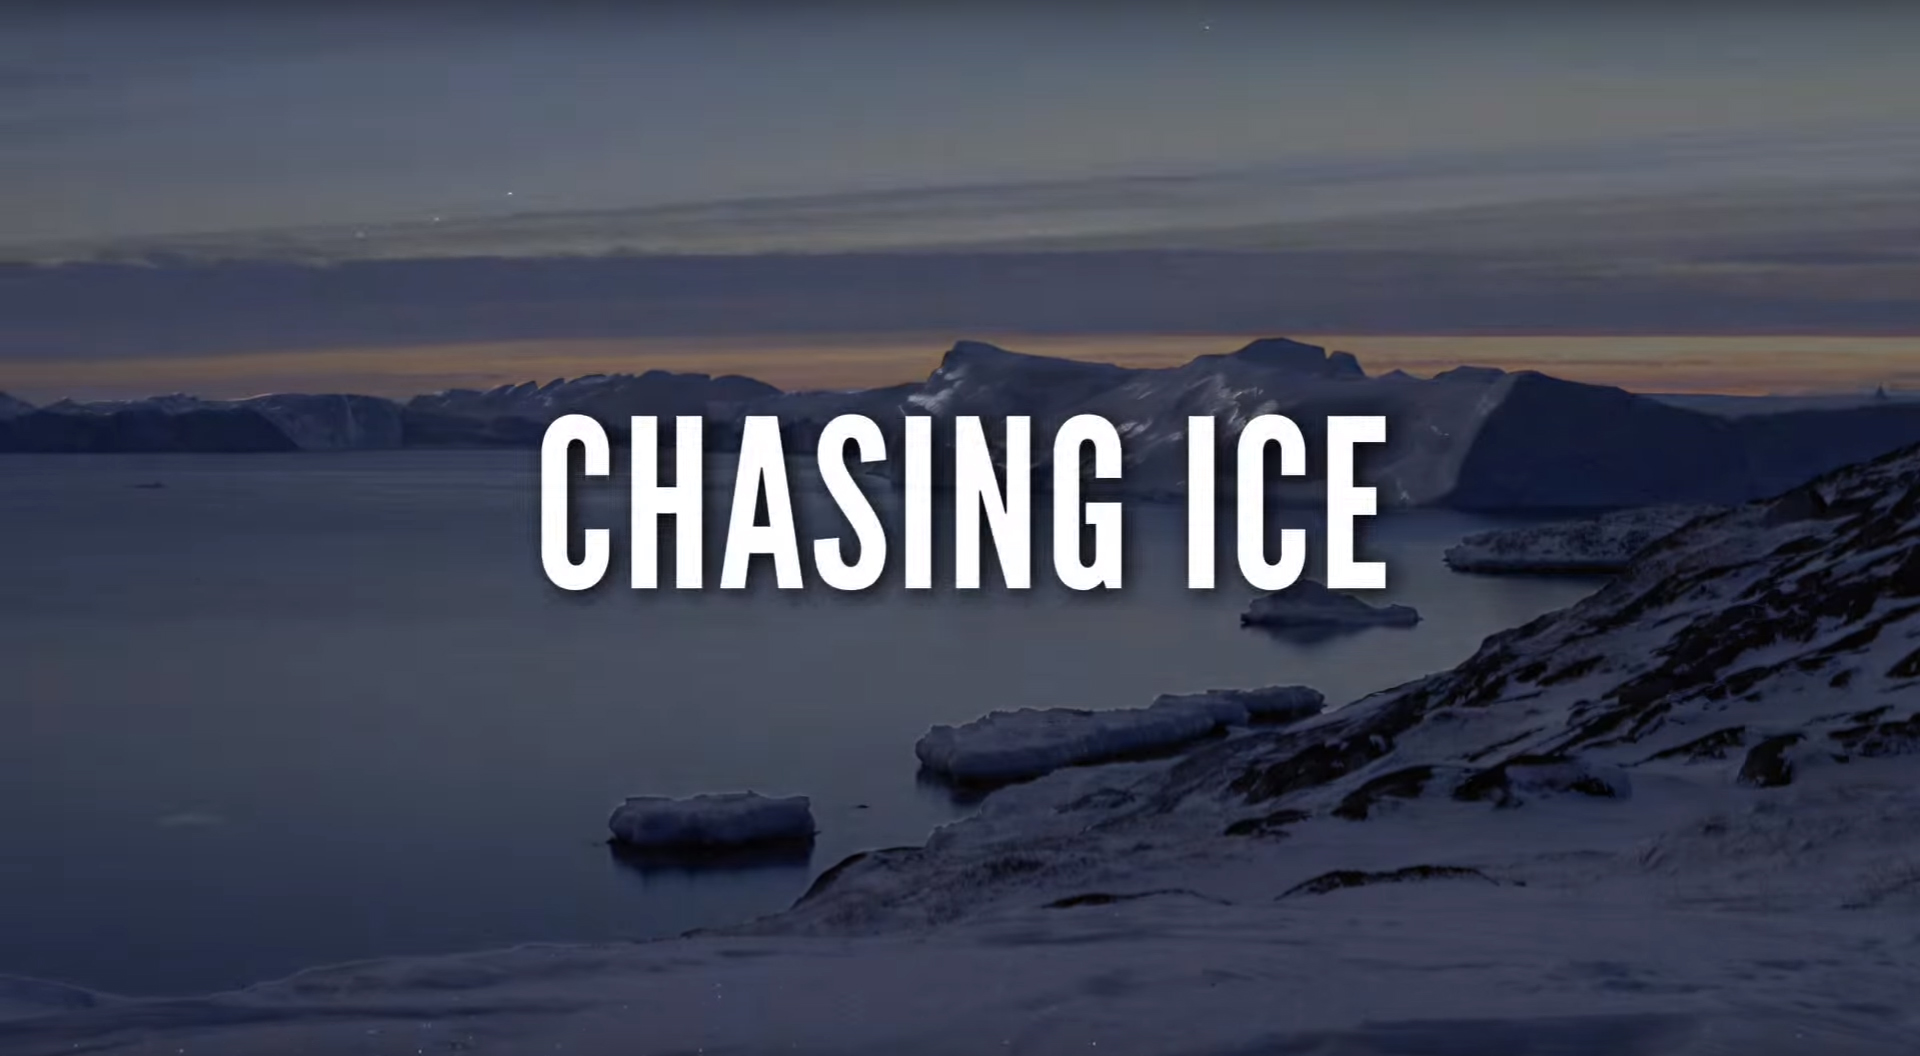 Chasing Ice image